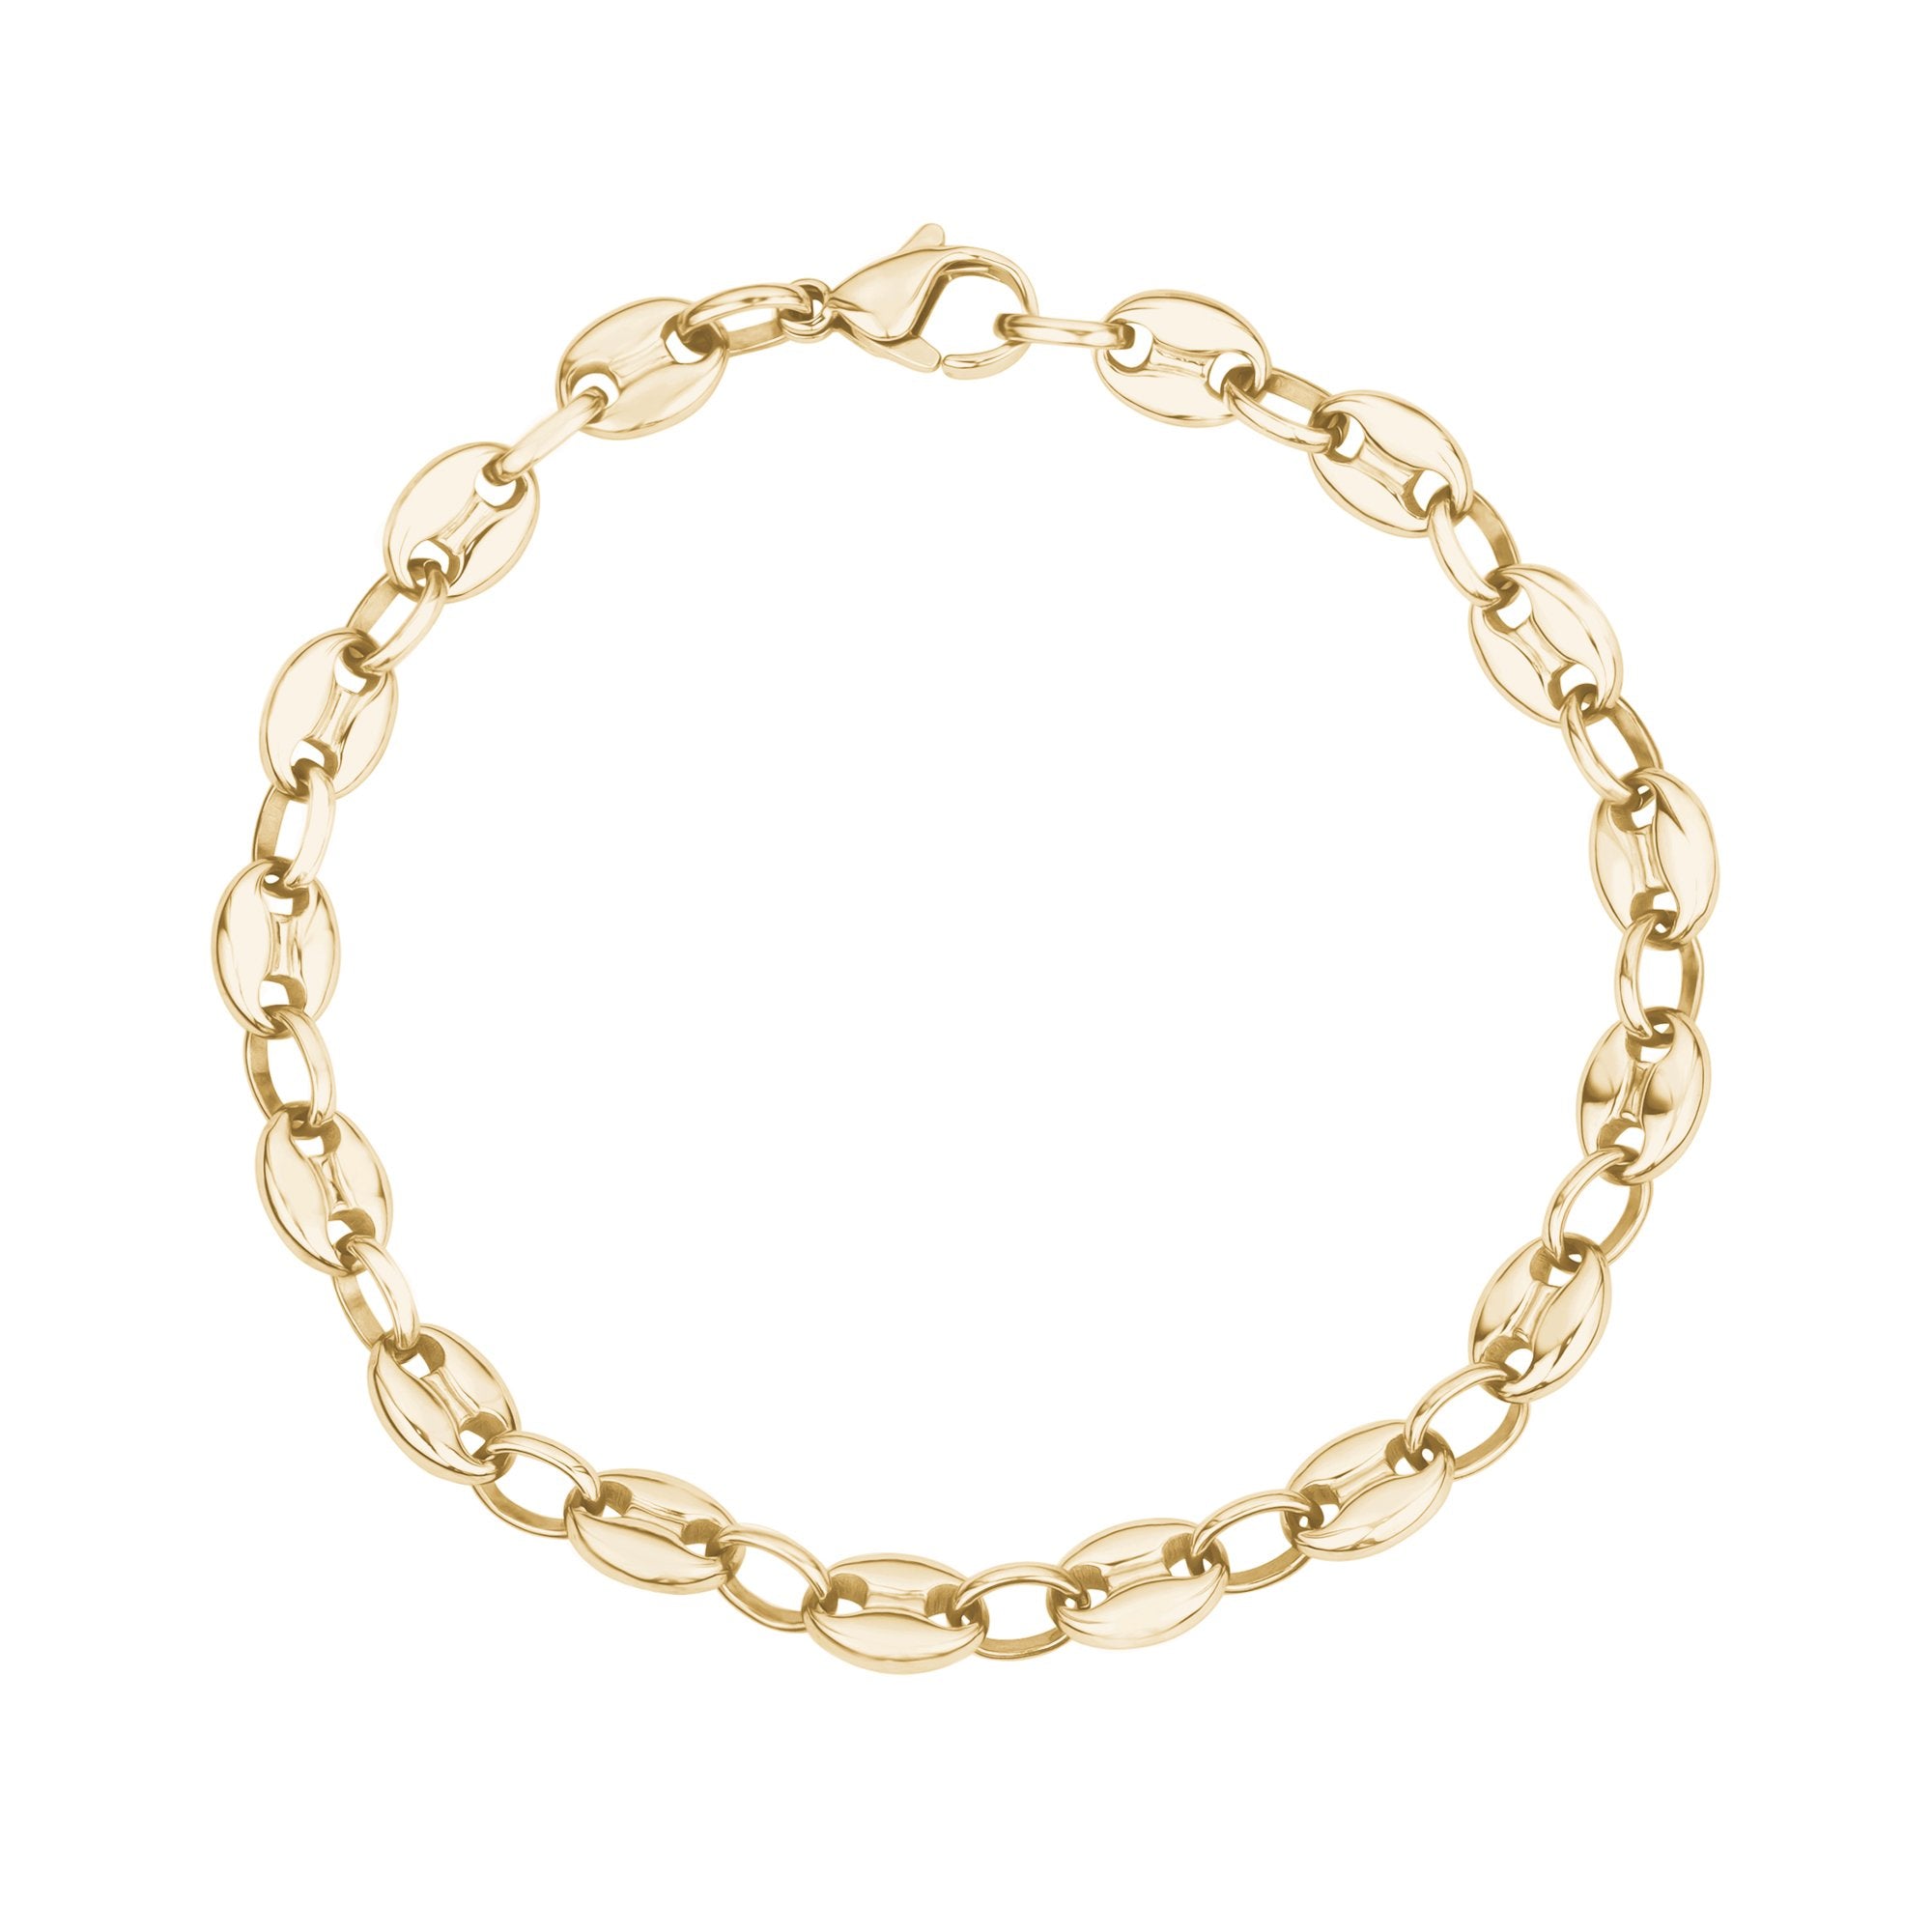 Buy Gold Bracelets & Bangles for Women by Bevogue Online | Ajio.com